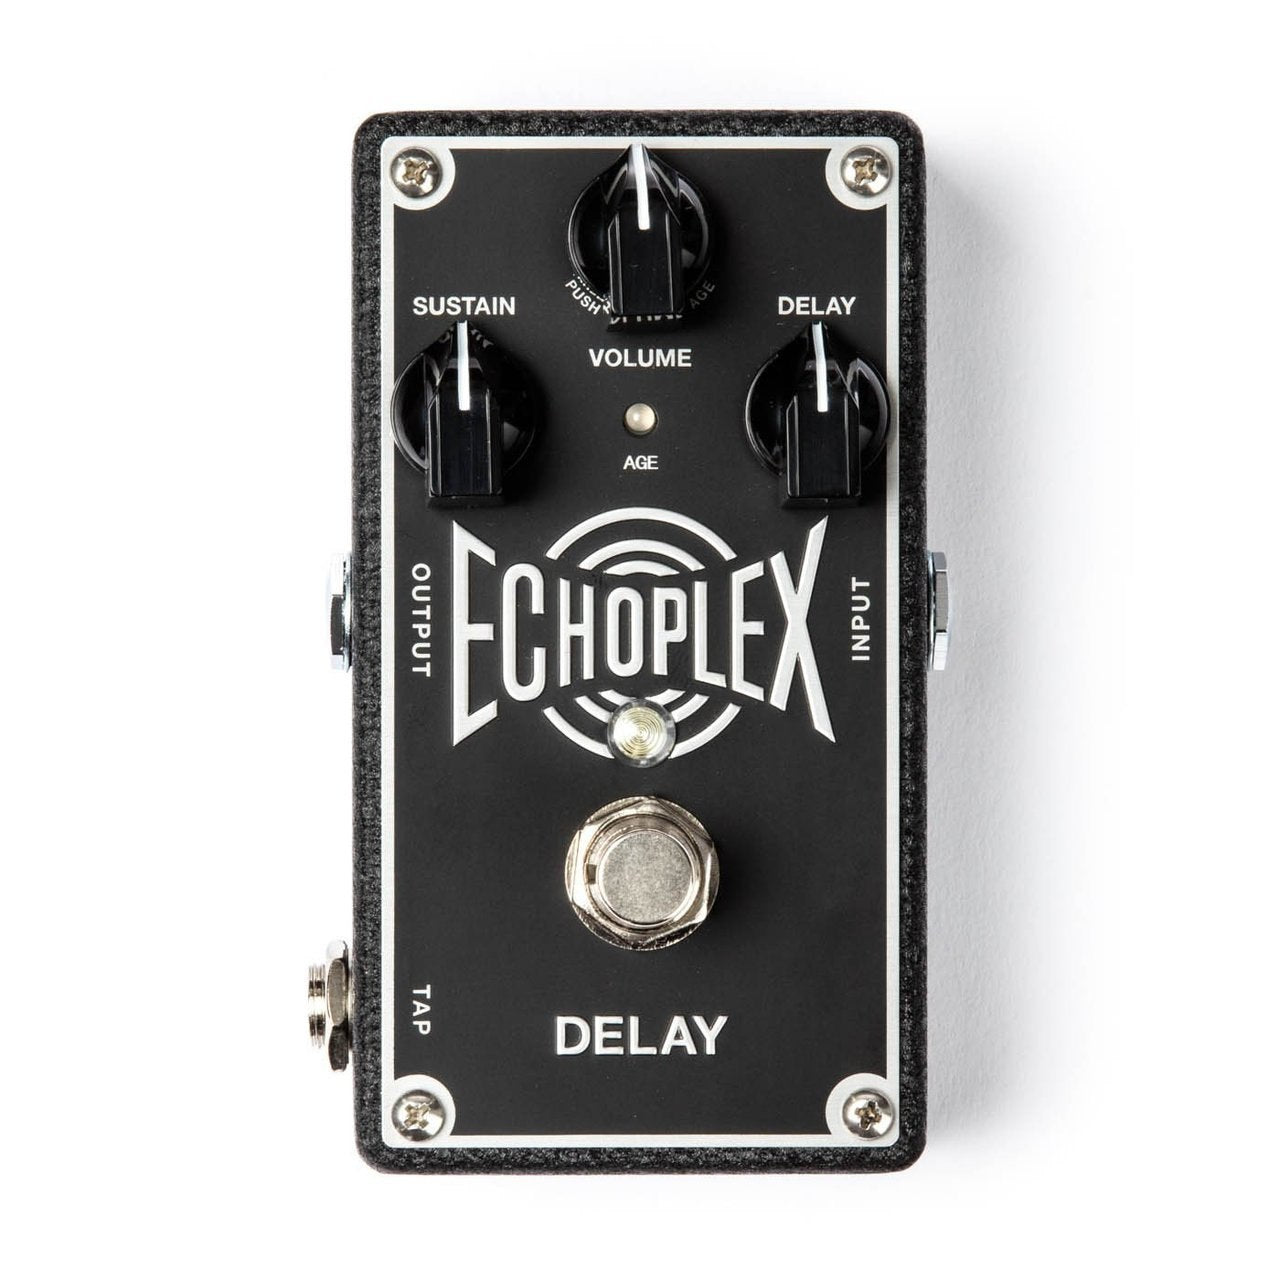 Dunlop Echoplex EP-3 Tape-Style Delay Pedal